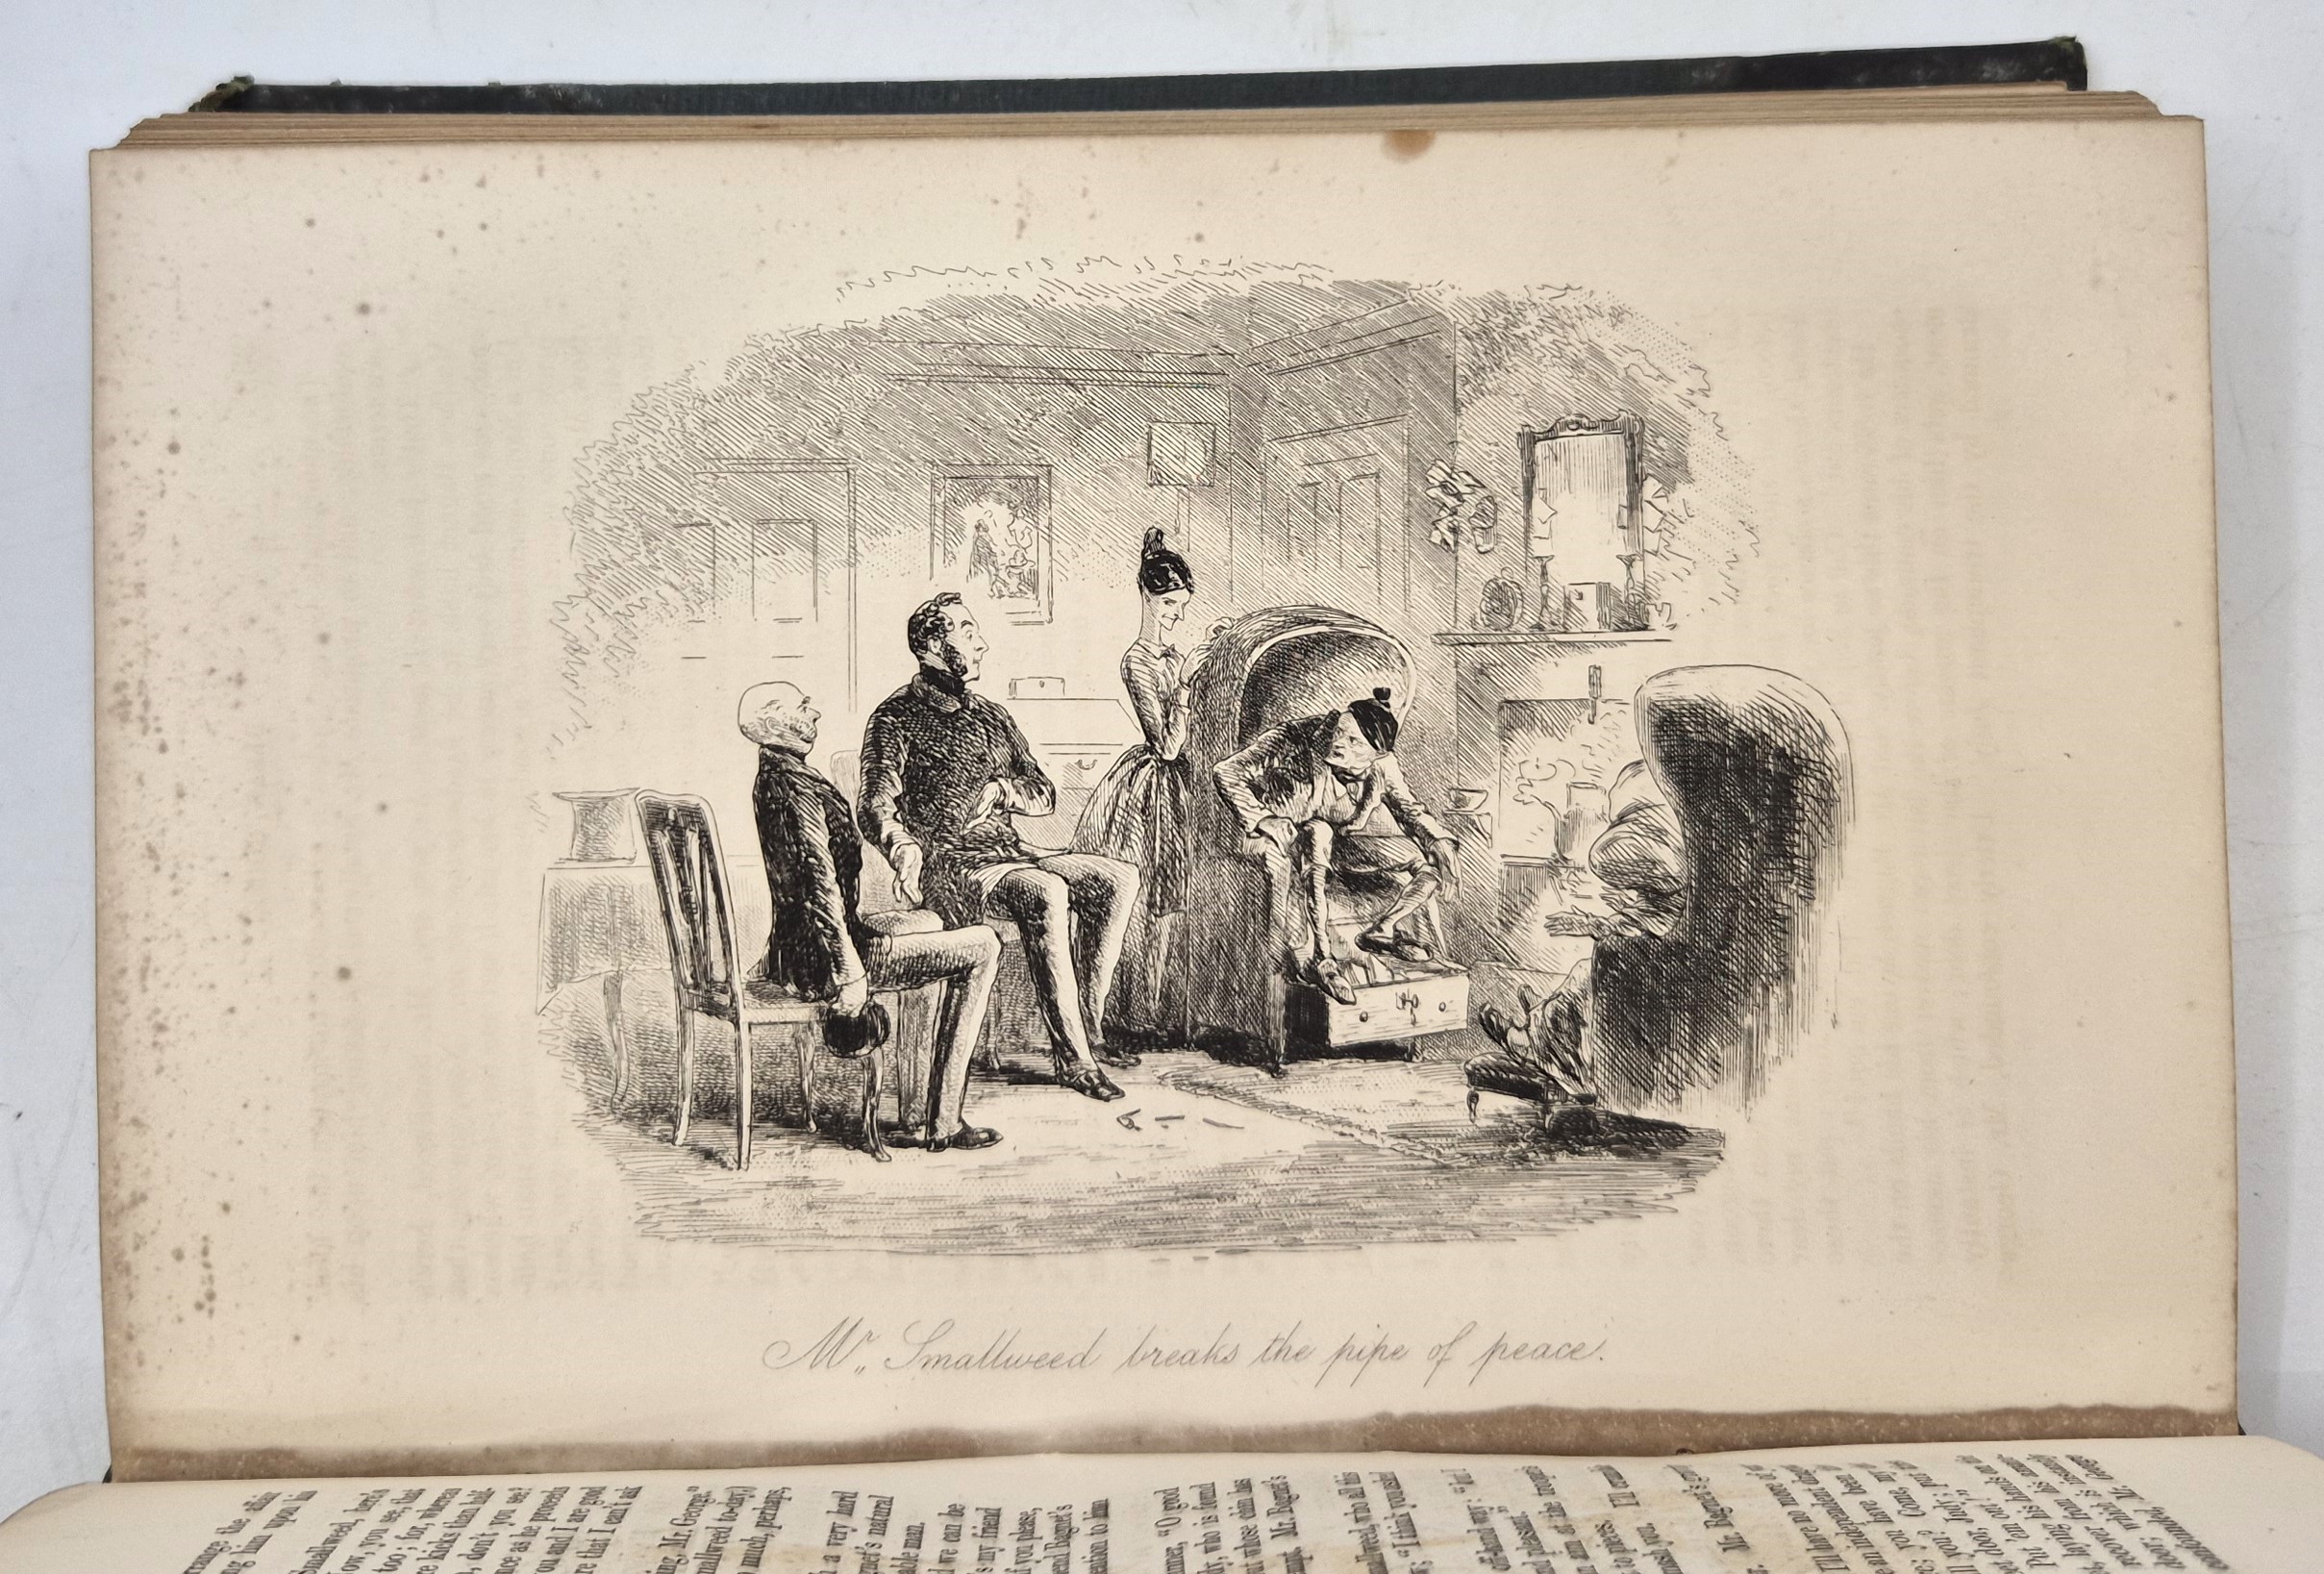 Dickens (Charles), "Bleak House", London; Bradbury & Evans, 1853, 1st edition, 8vo, illustrations by - Image 3 of 3